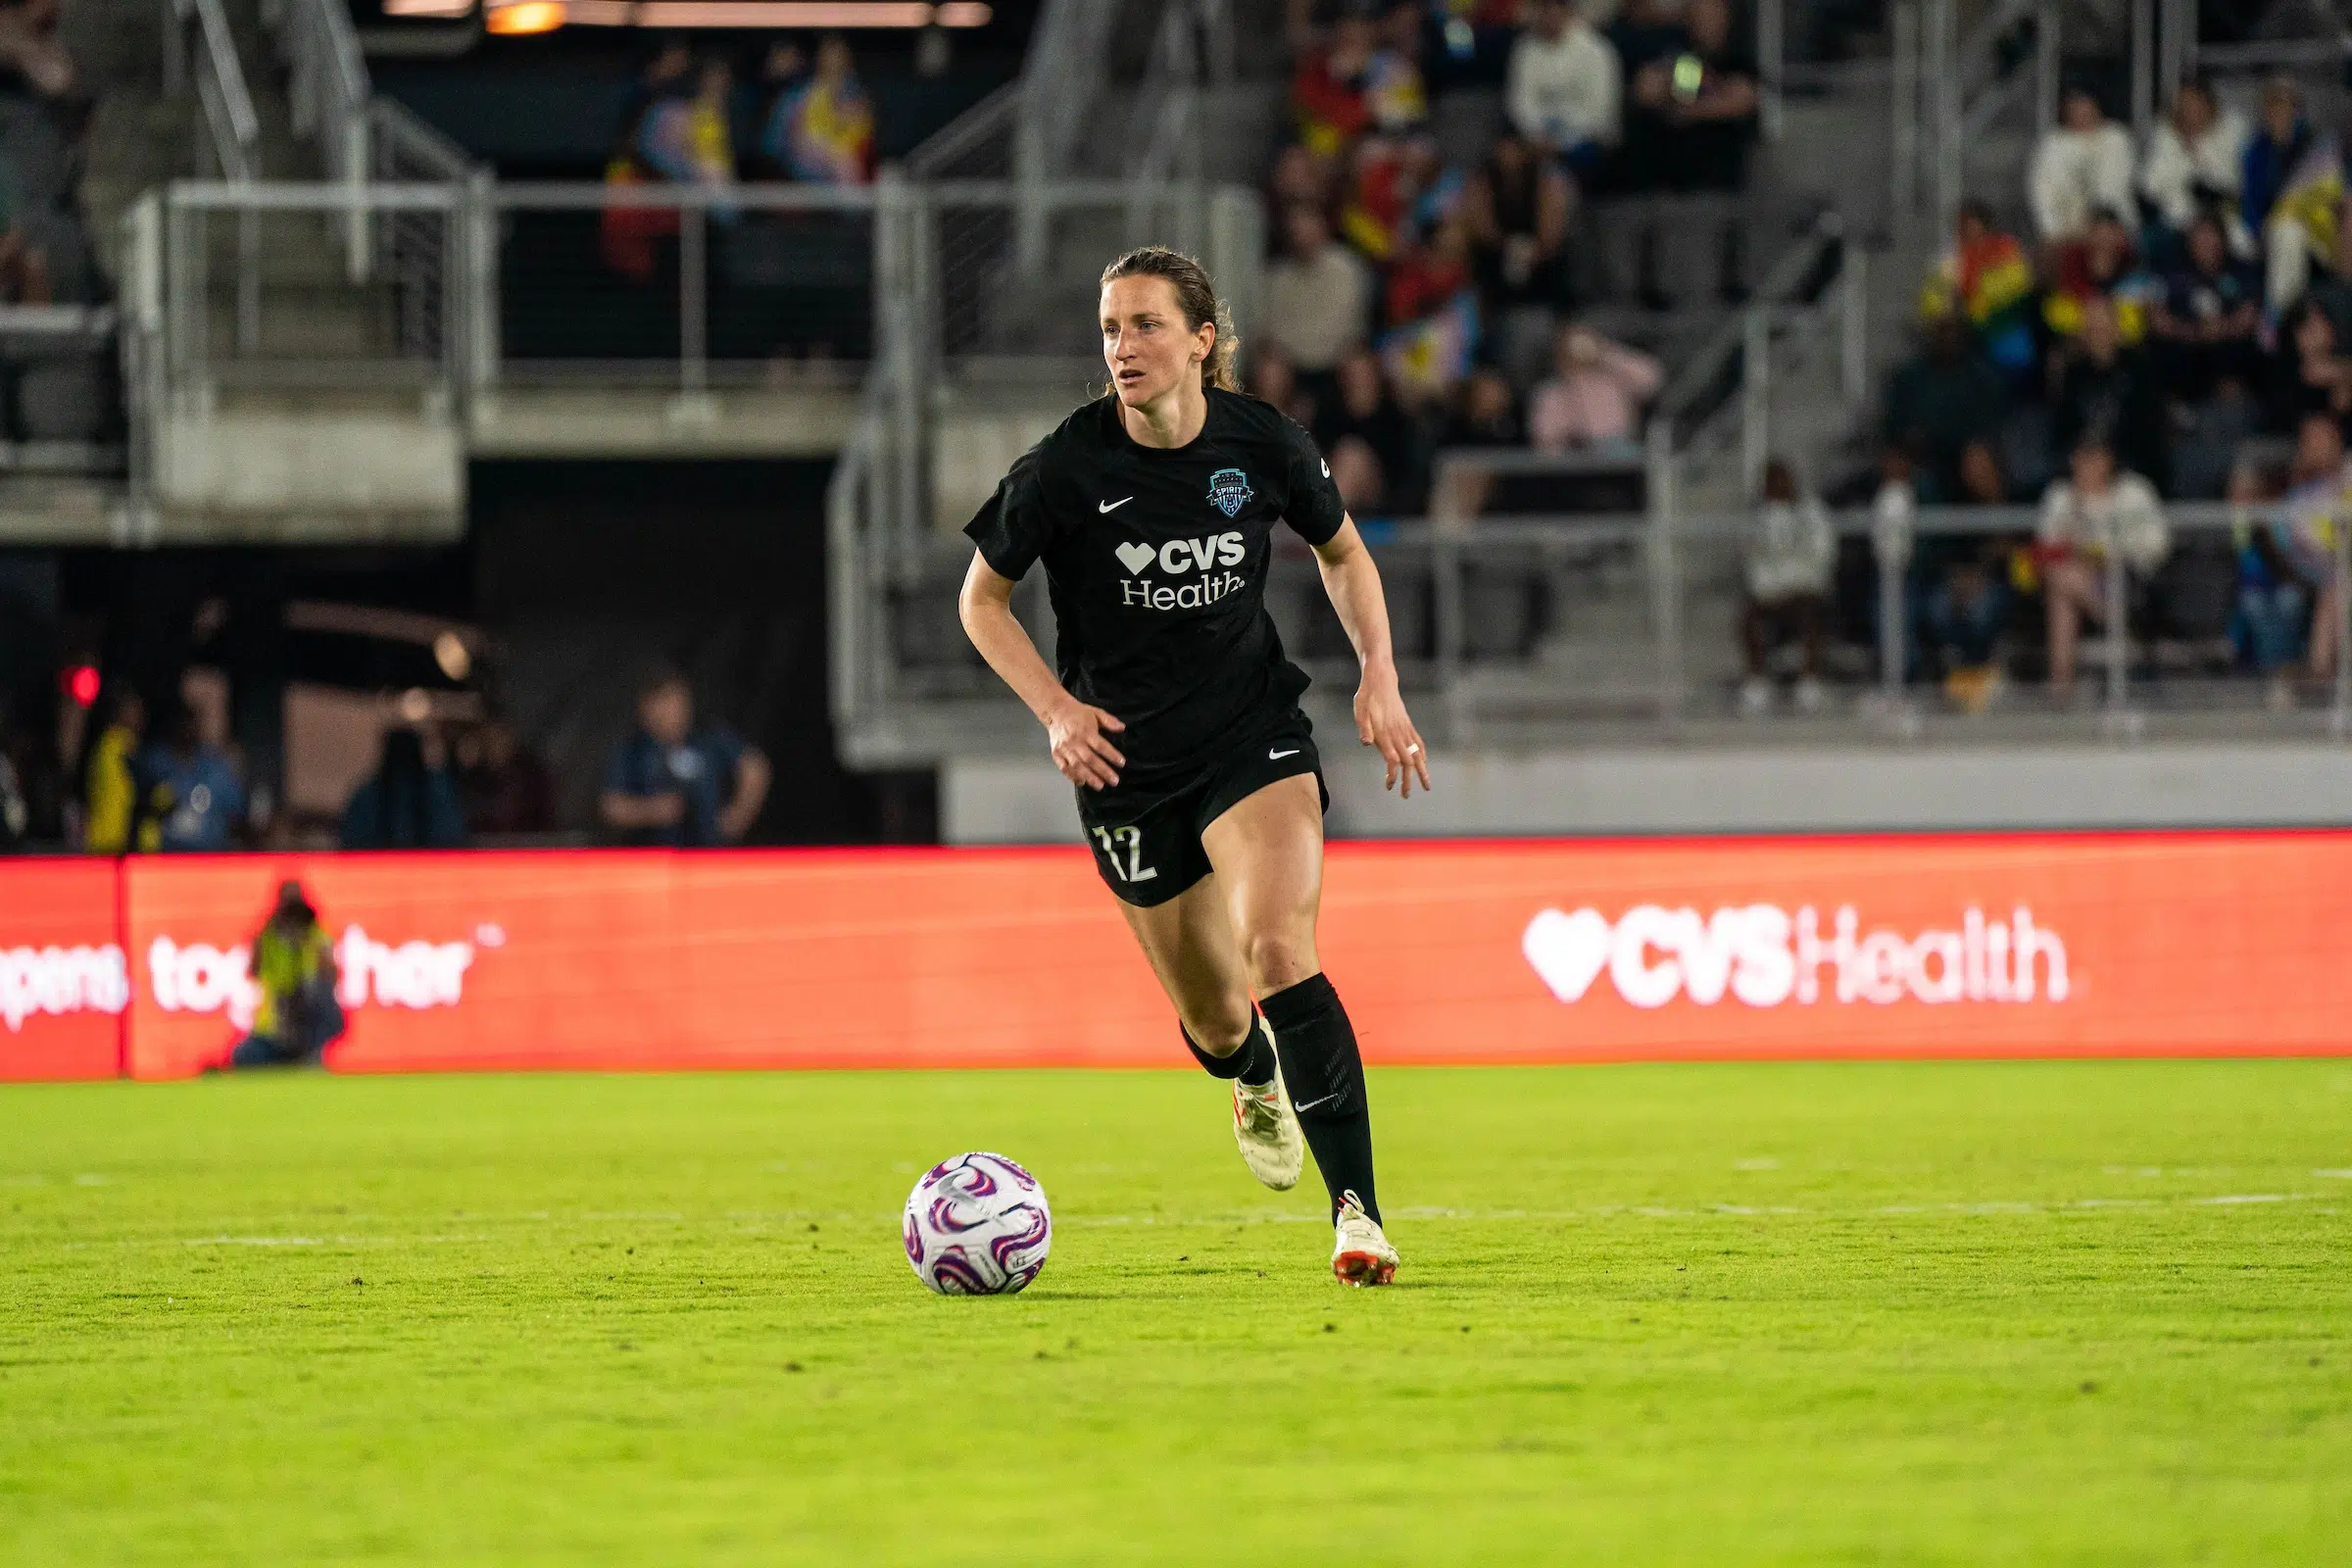 Andi Sullivan in an all black uniform dribbles a soccer ball on a bright green field.